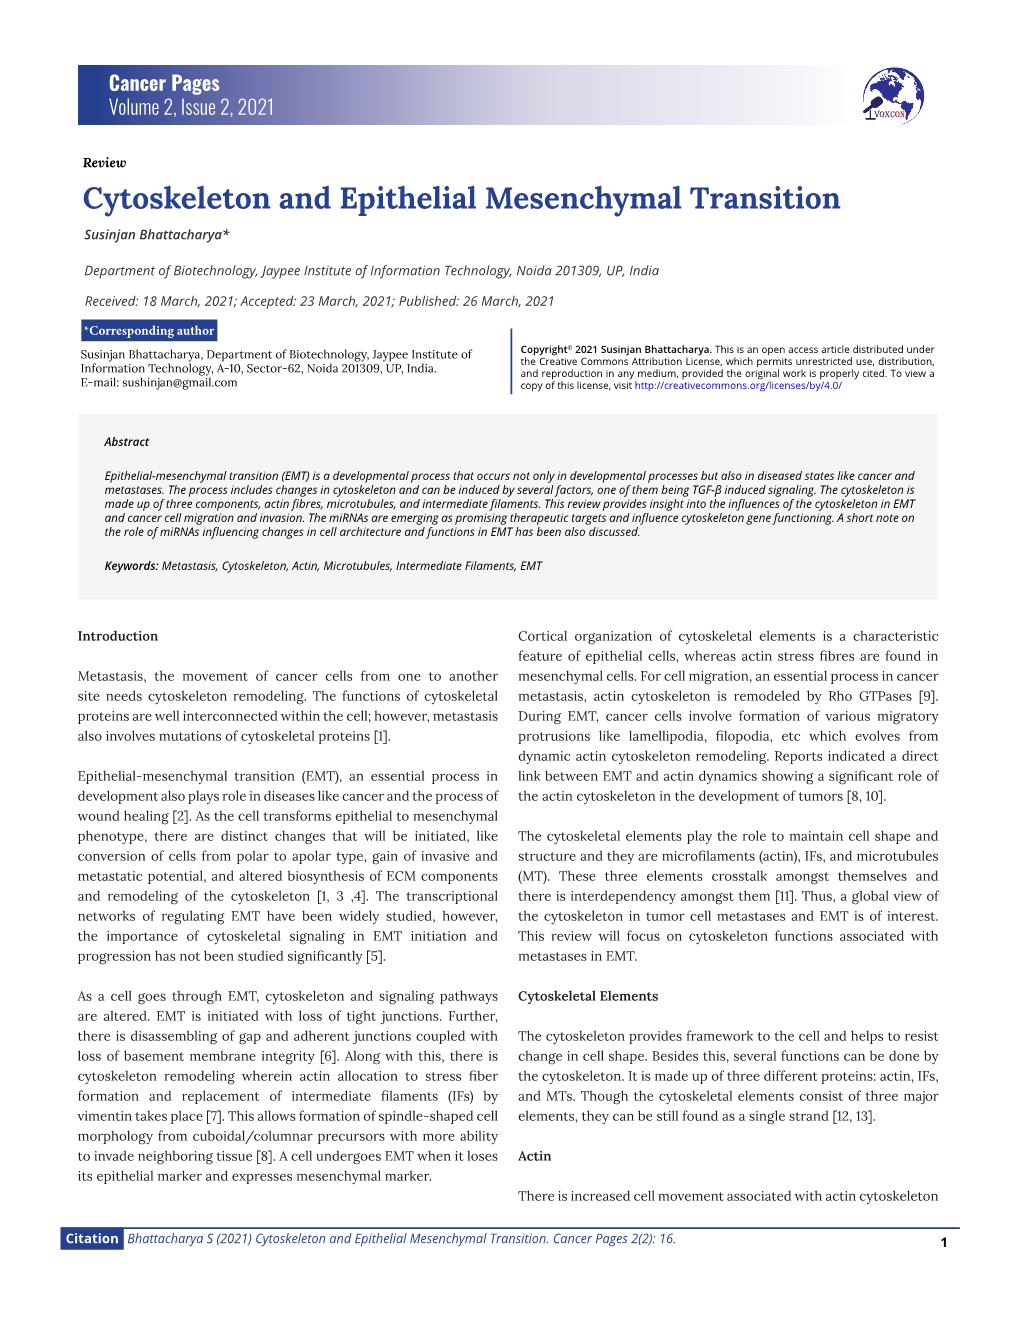 Cytoskeleton and Epithelial Mesenchymal Transition Susinjan Bhattacharya*